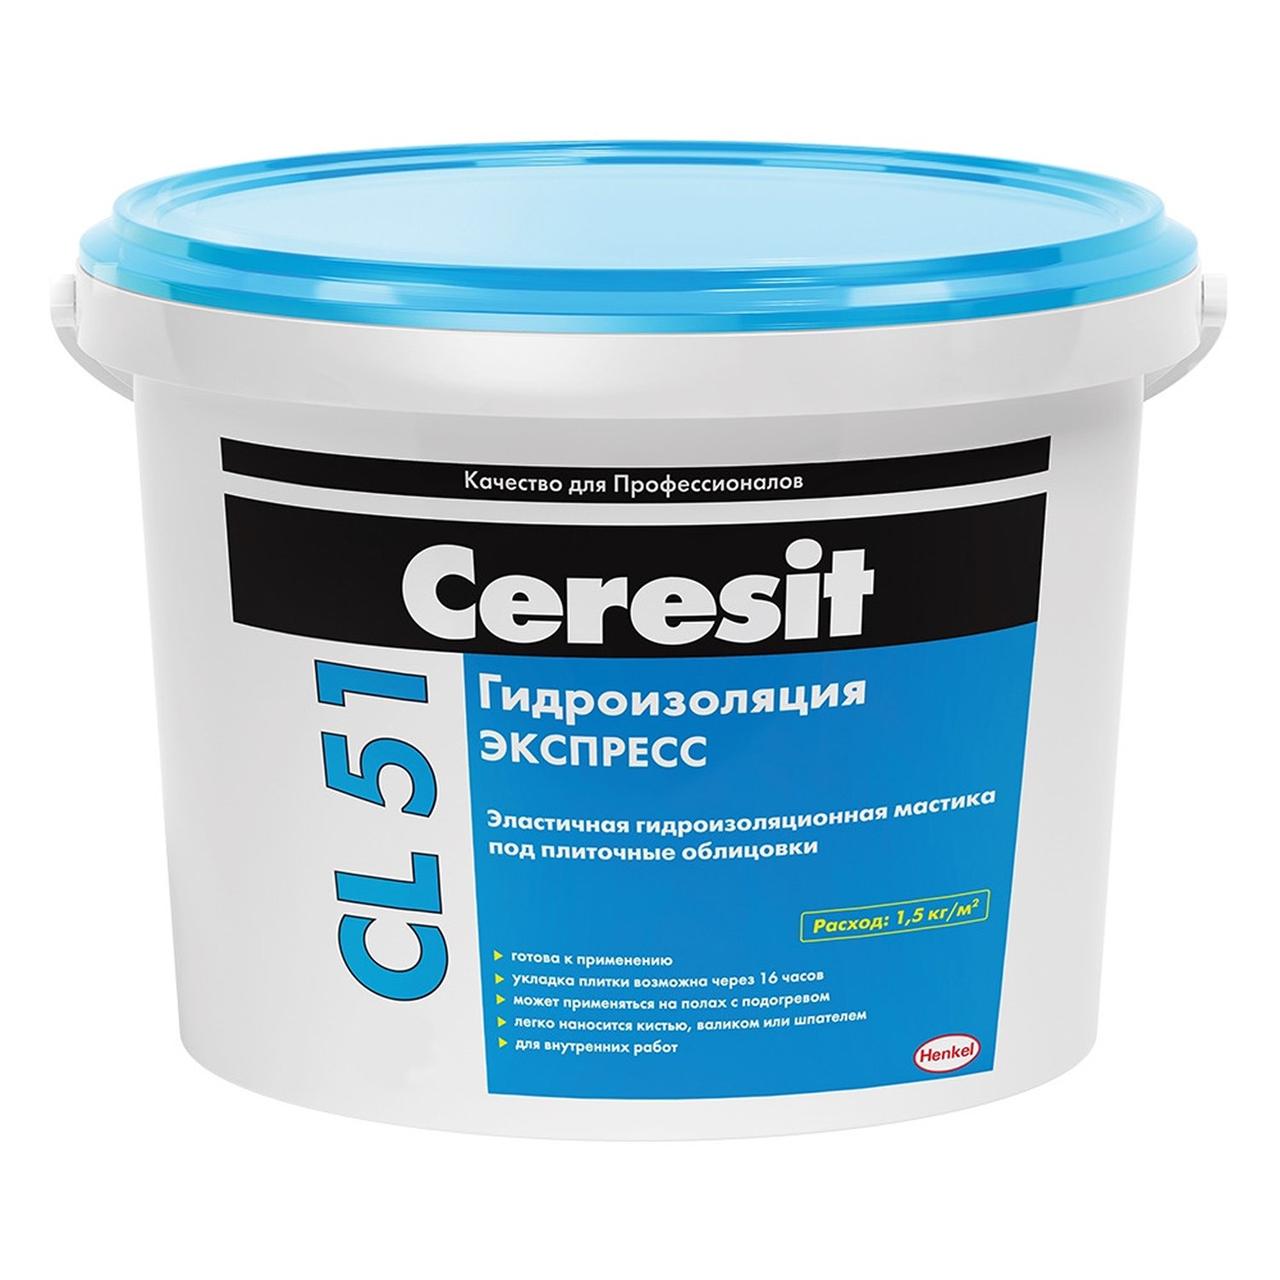 Ceresit CL 51 Эластичная гидроизоляционная мастика, 15 кг